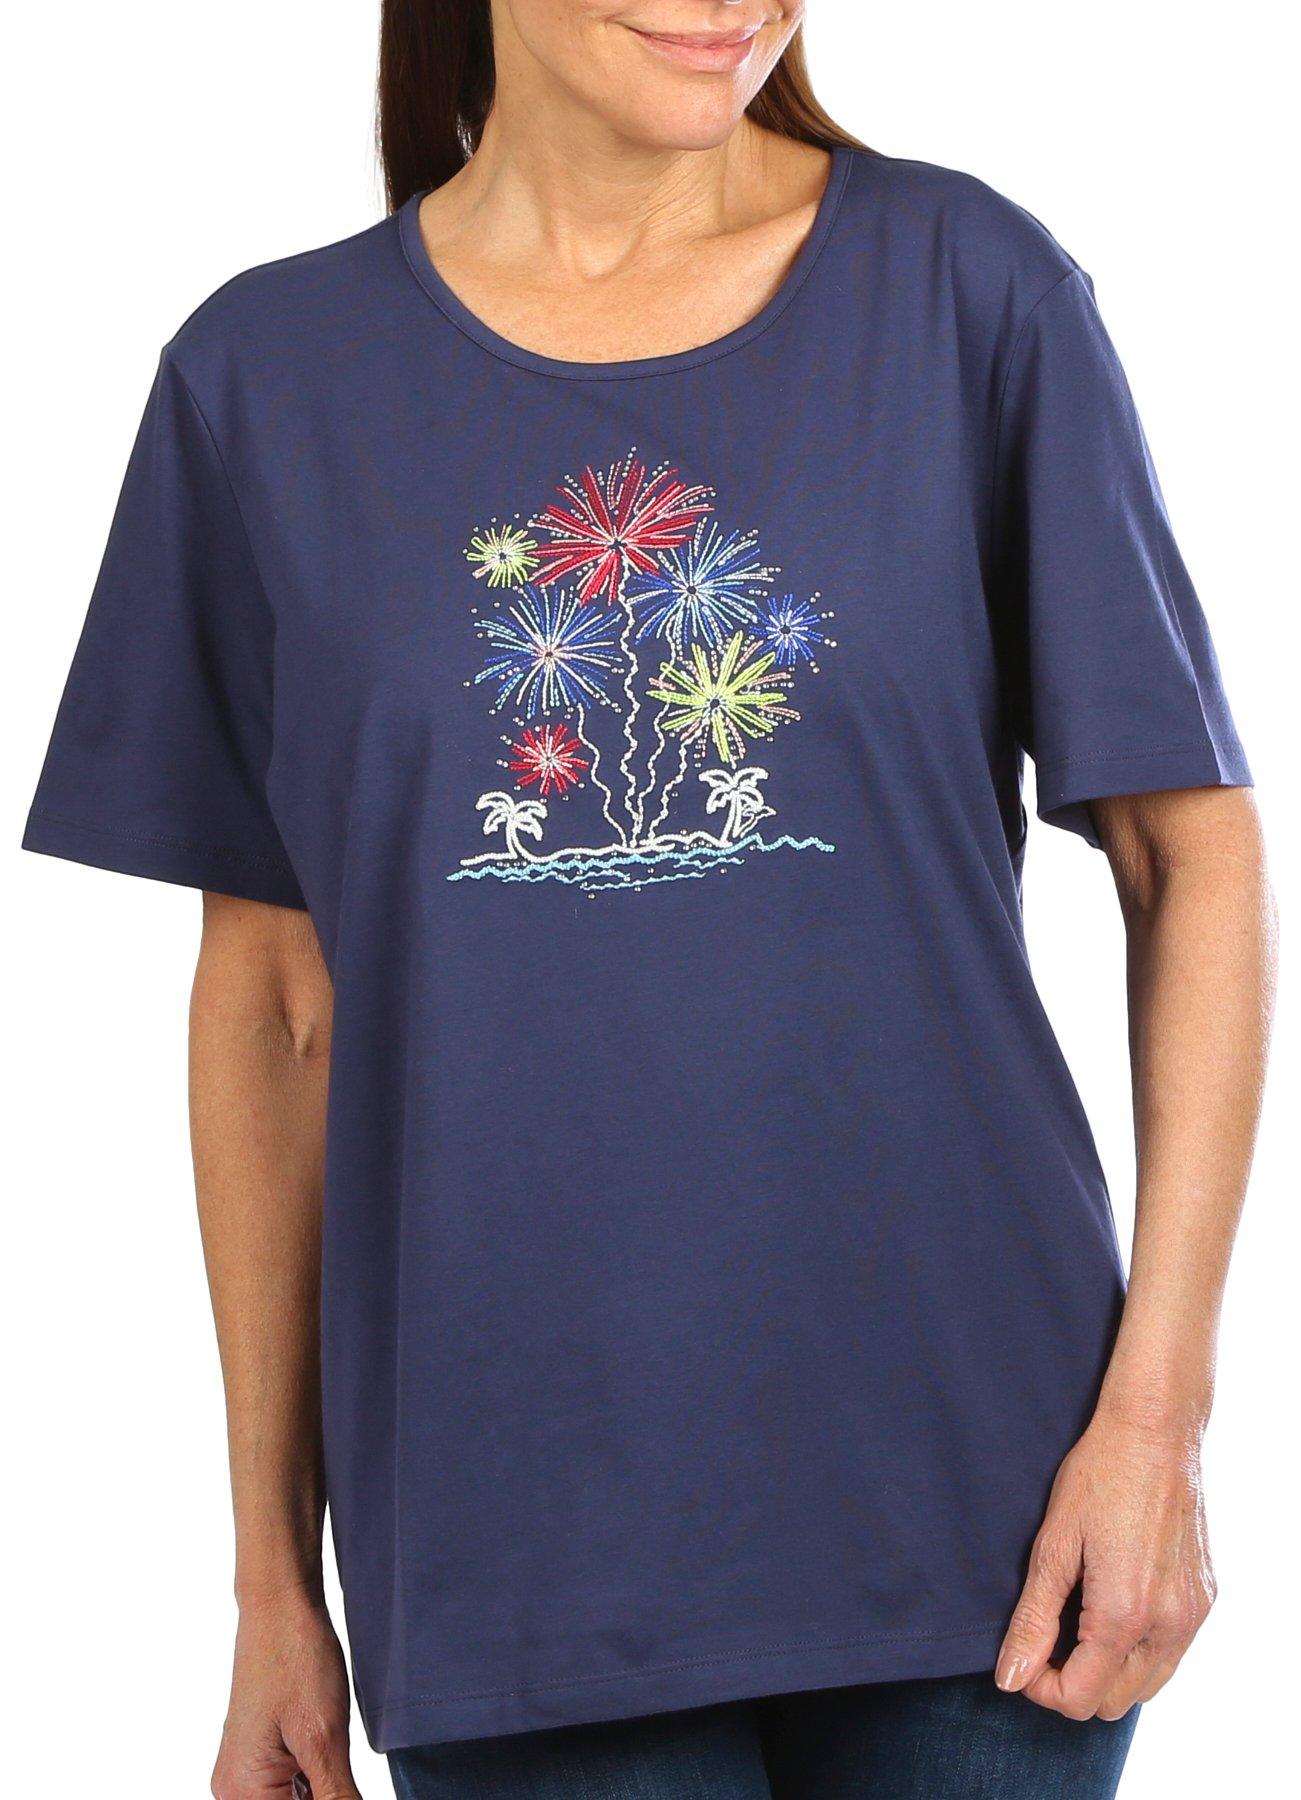 Coral Bay Womens Americana Fireworks Jewel Short Sleeve Top